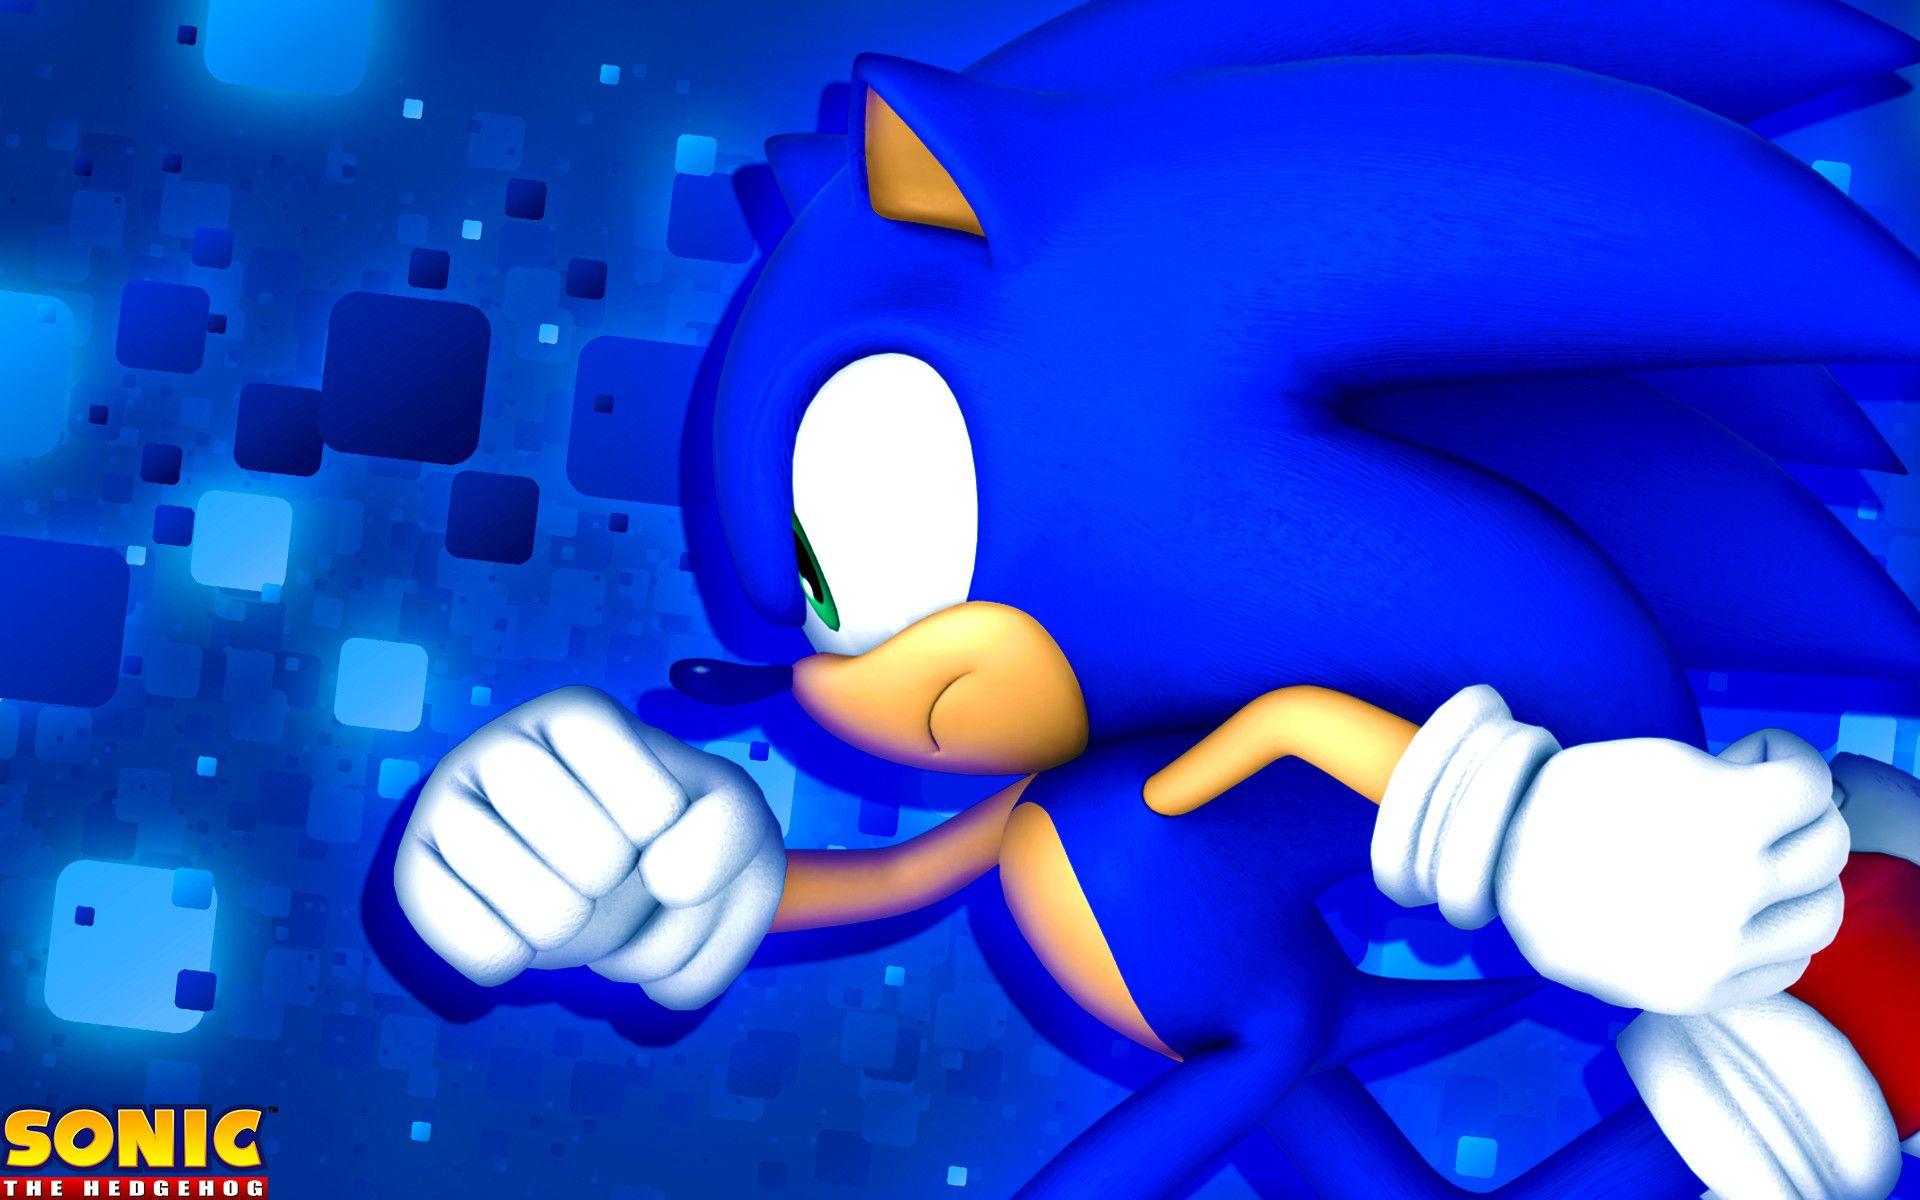 Sonic Background for Desk. Sonic the hedgehog